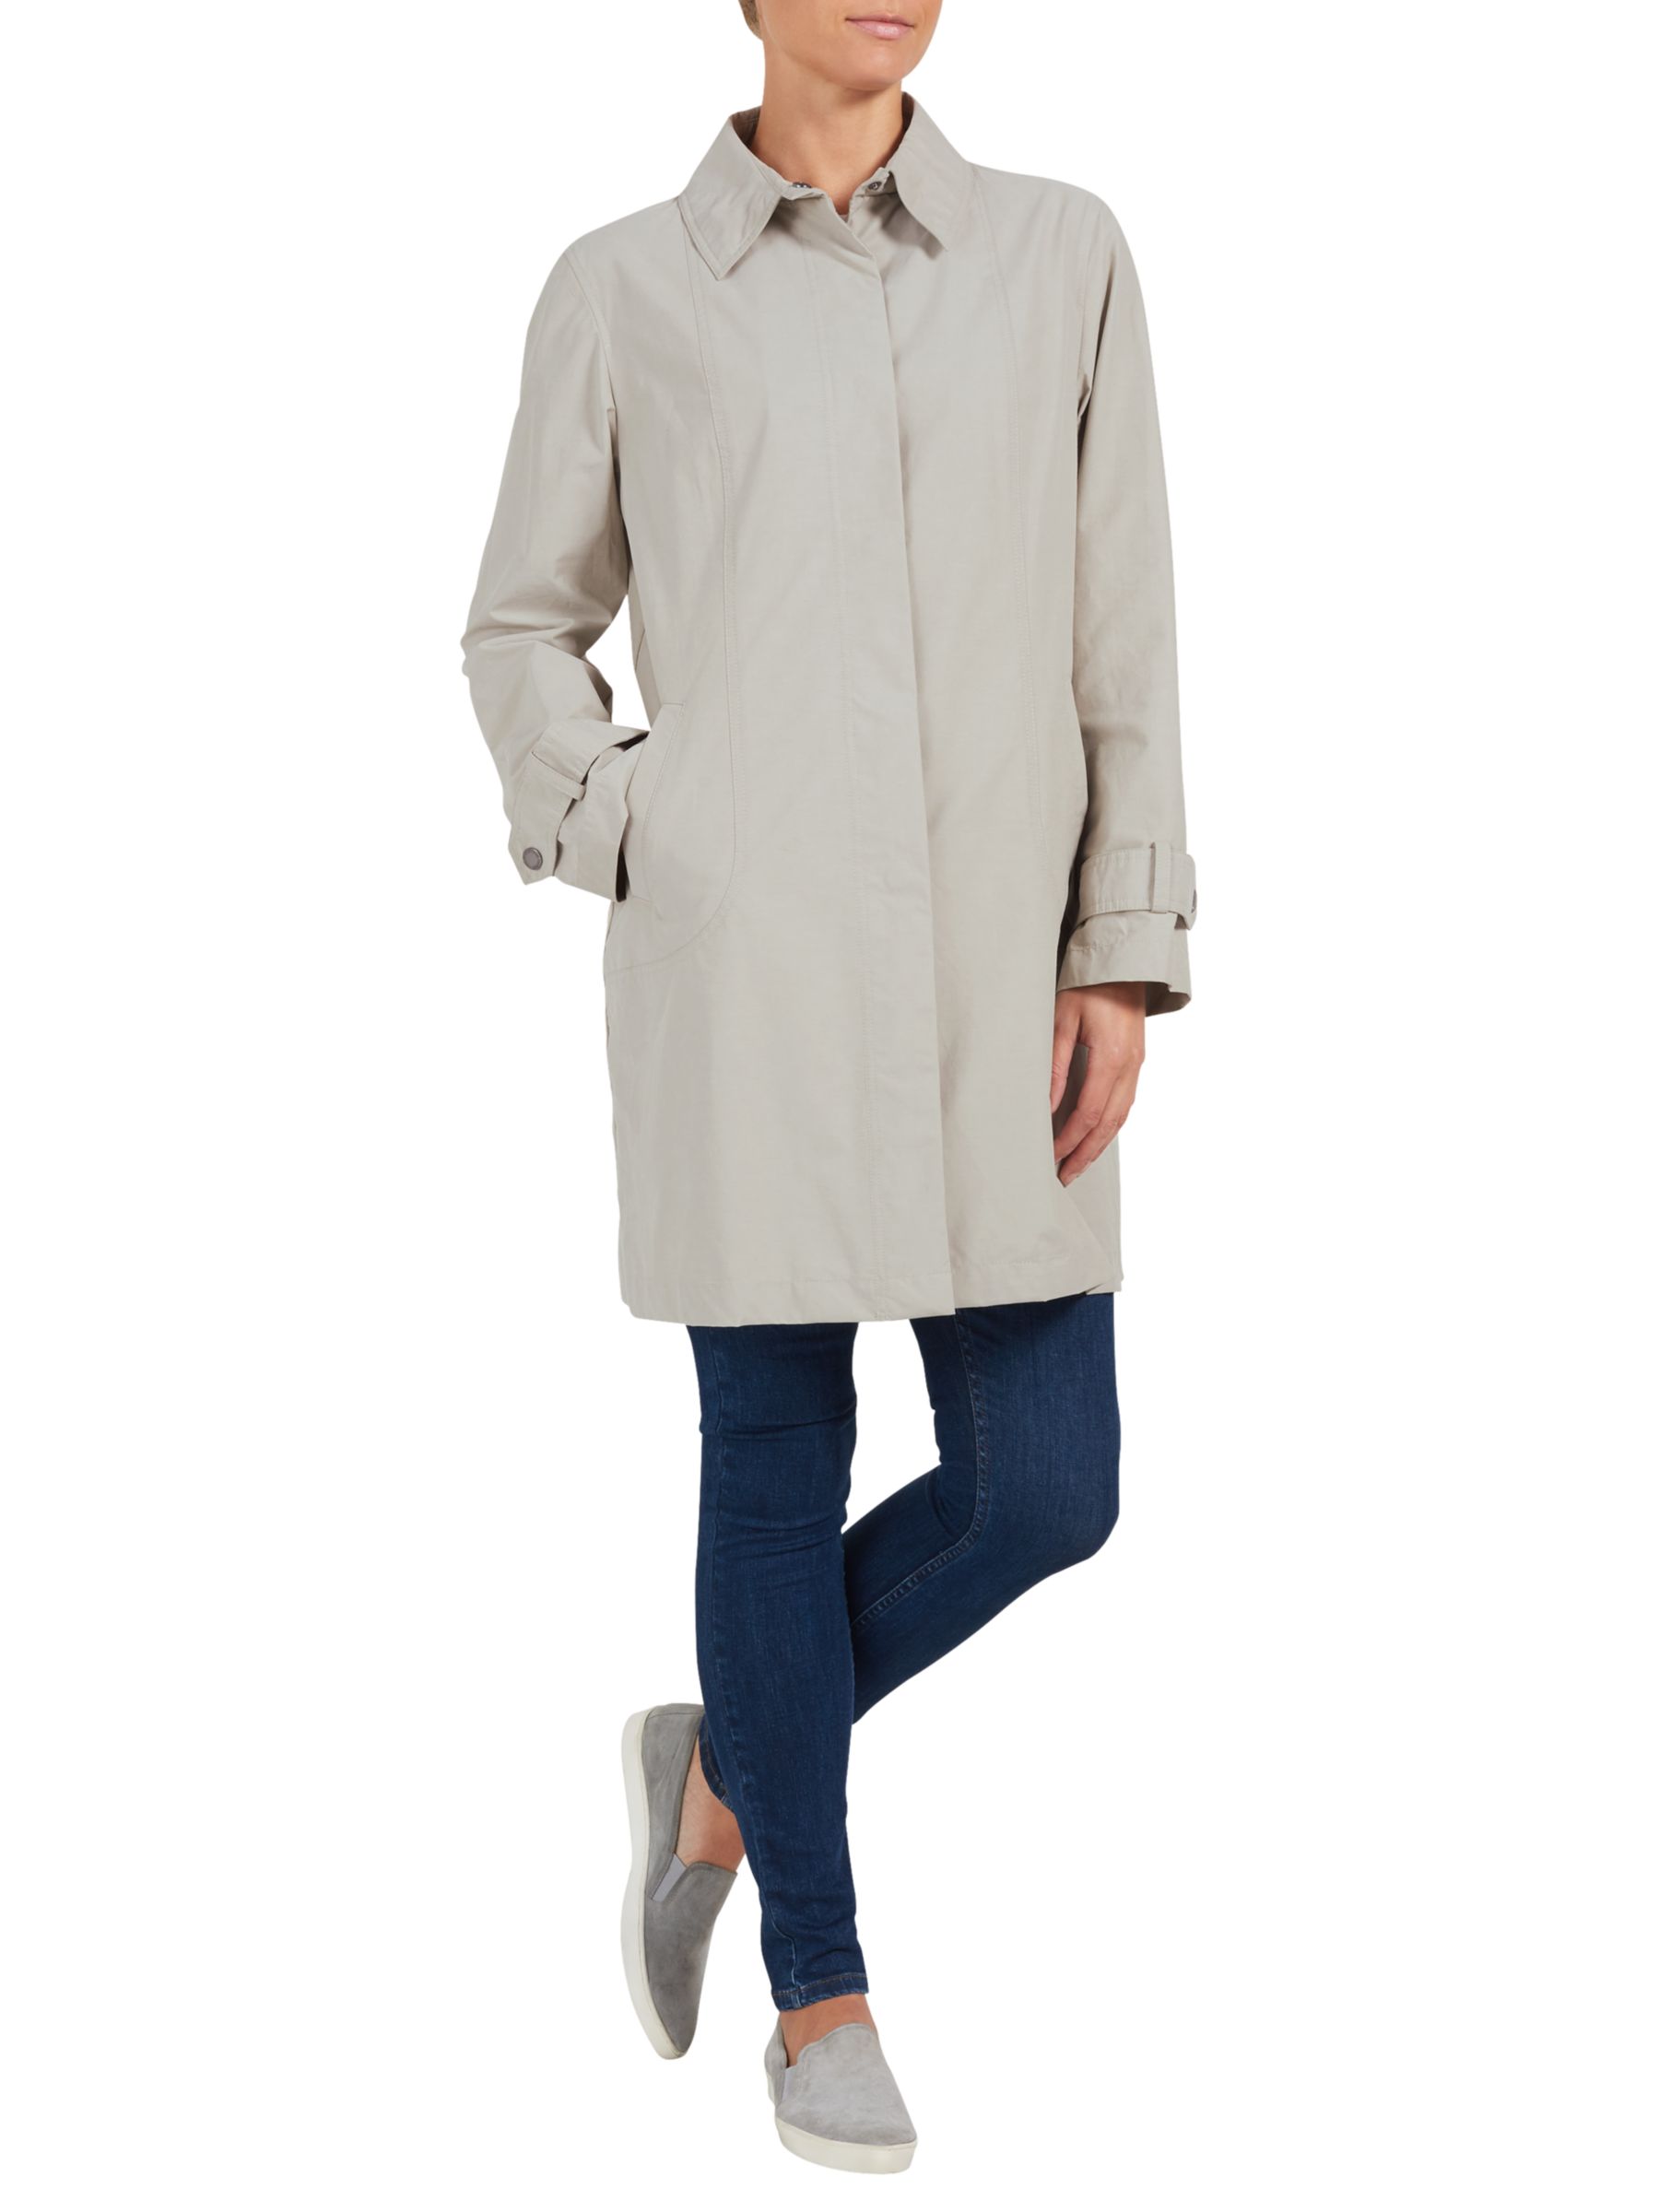 Four Seasons Unlined Contemporary Raincoat, Silver/Kiwi, XL